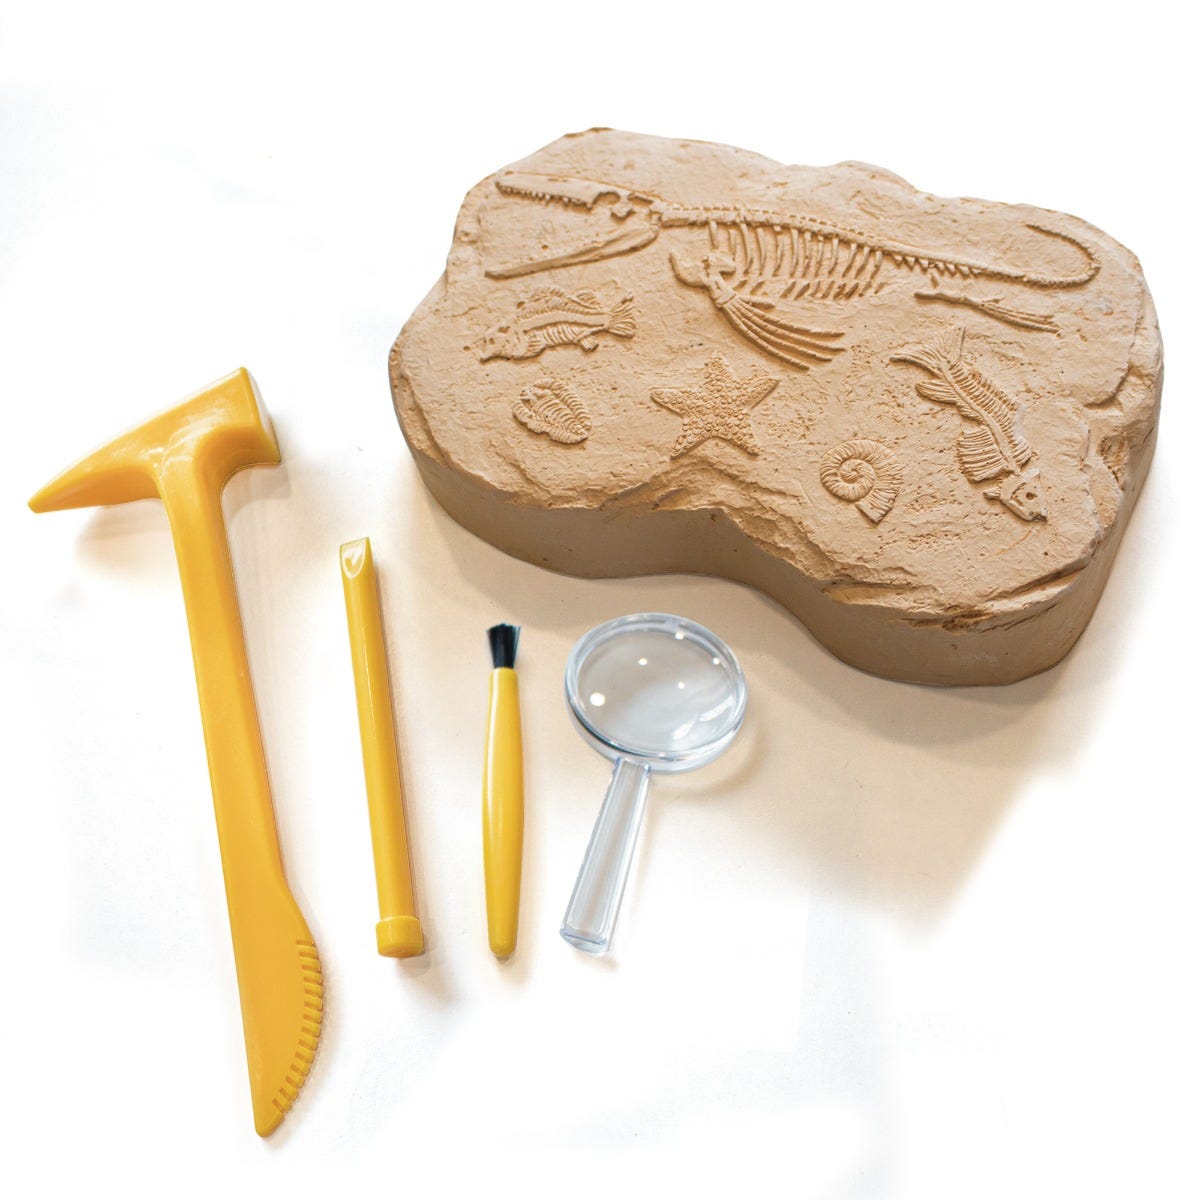 GeoSafari Fossil Excavation Kit Kaboodles Toy Store - Victoria